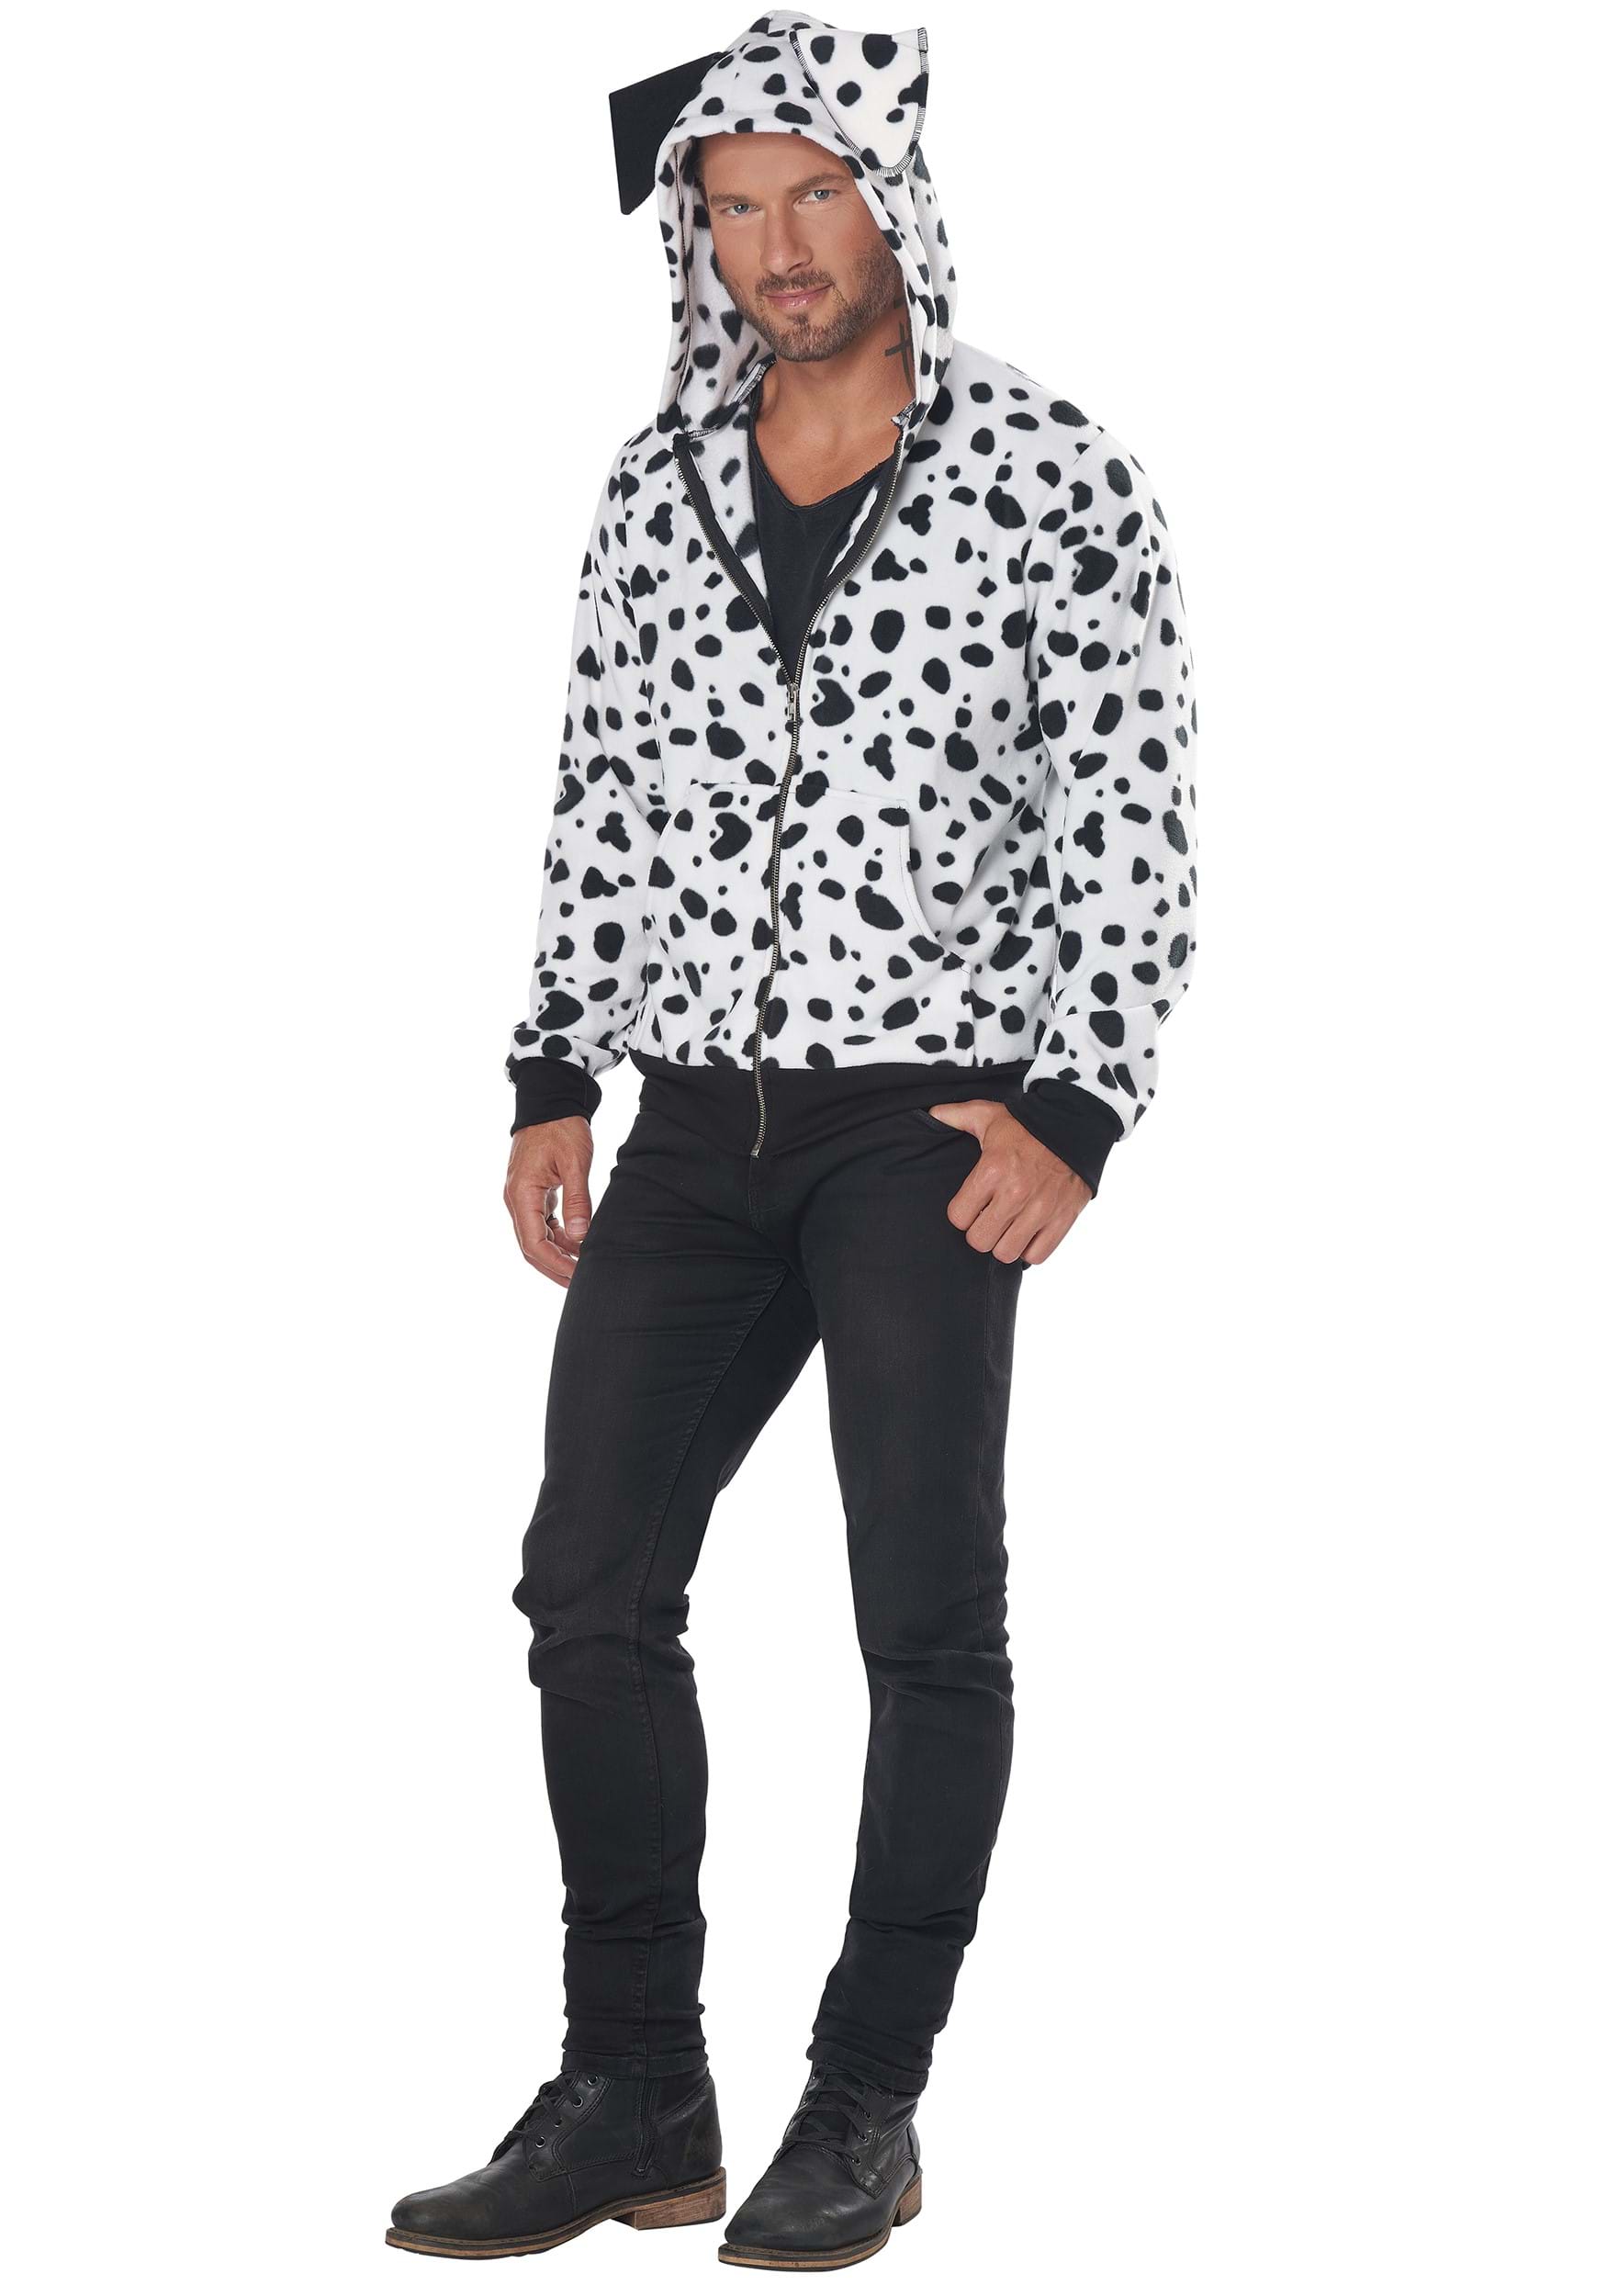 Dalmatian Hoodie Fancy Dress Costume For Men